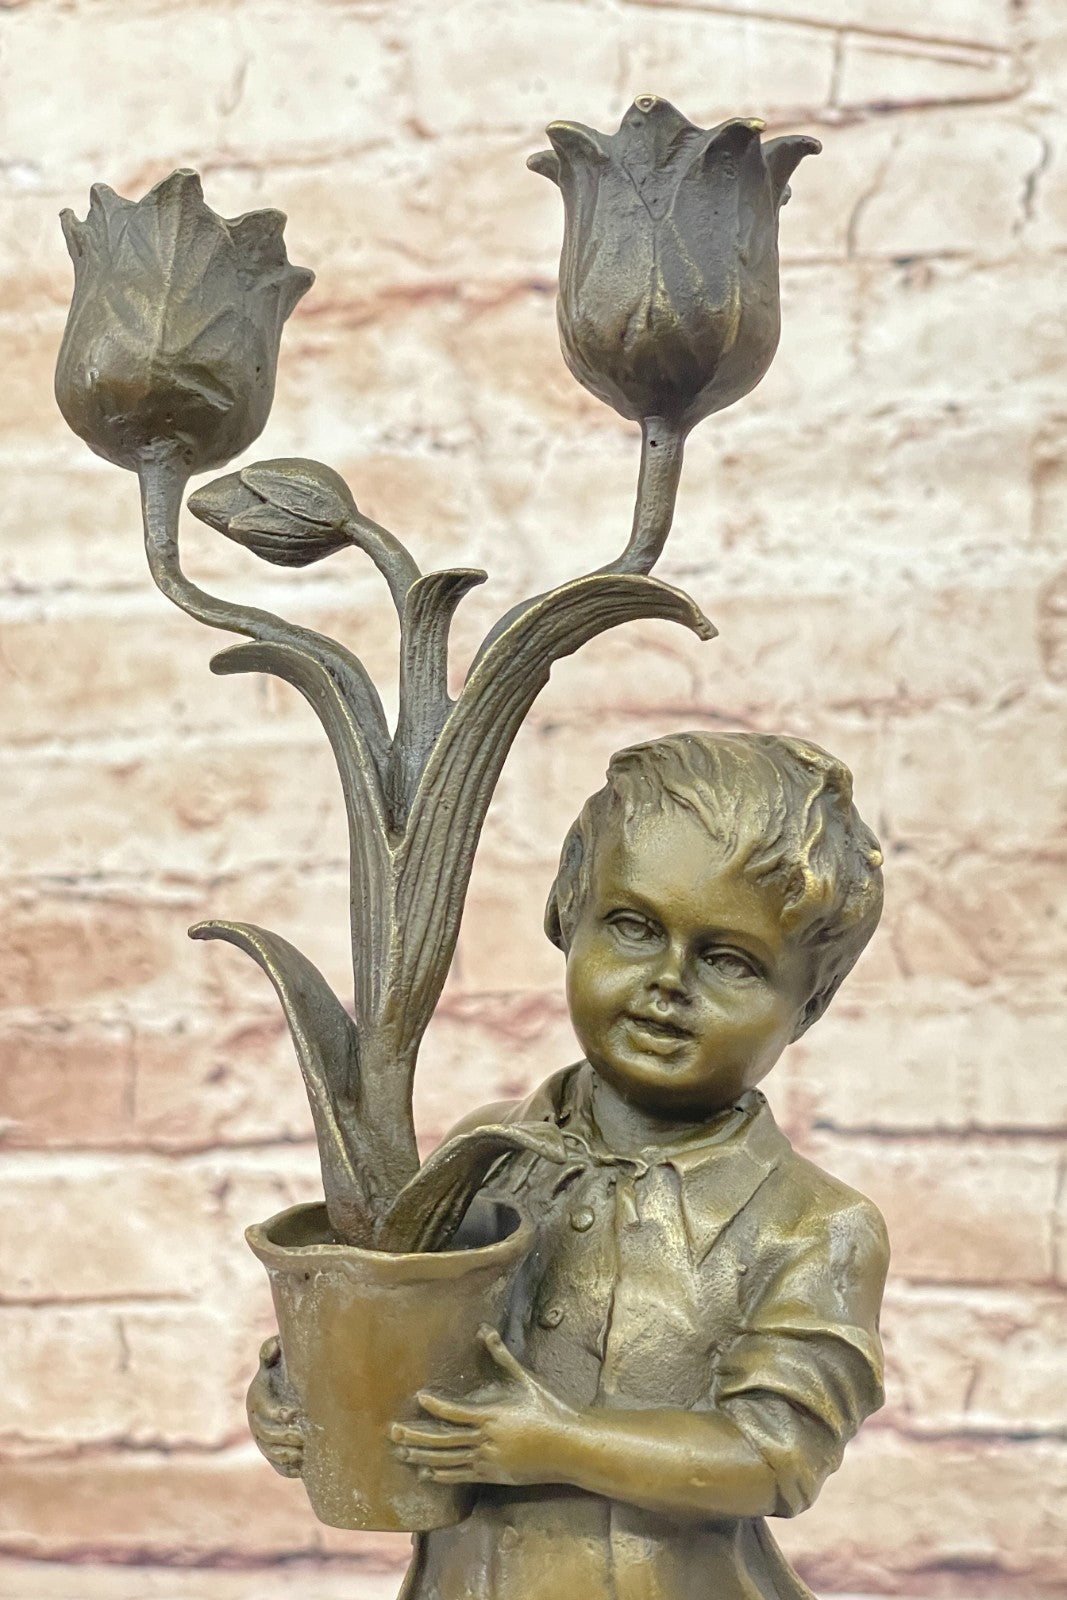 Collectible Aldo Vitaleh Bronze Sculpture - Young Boy Holding Tulip Vase Candle Holder